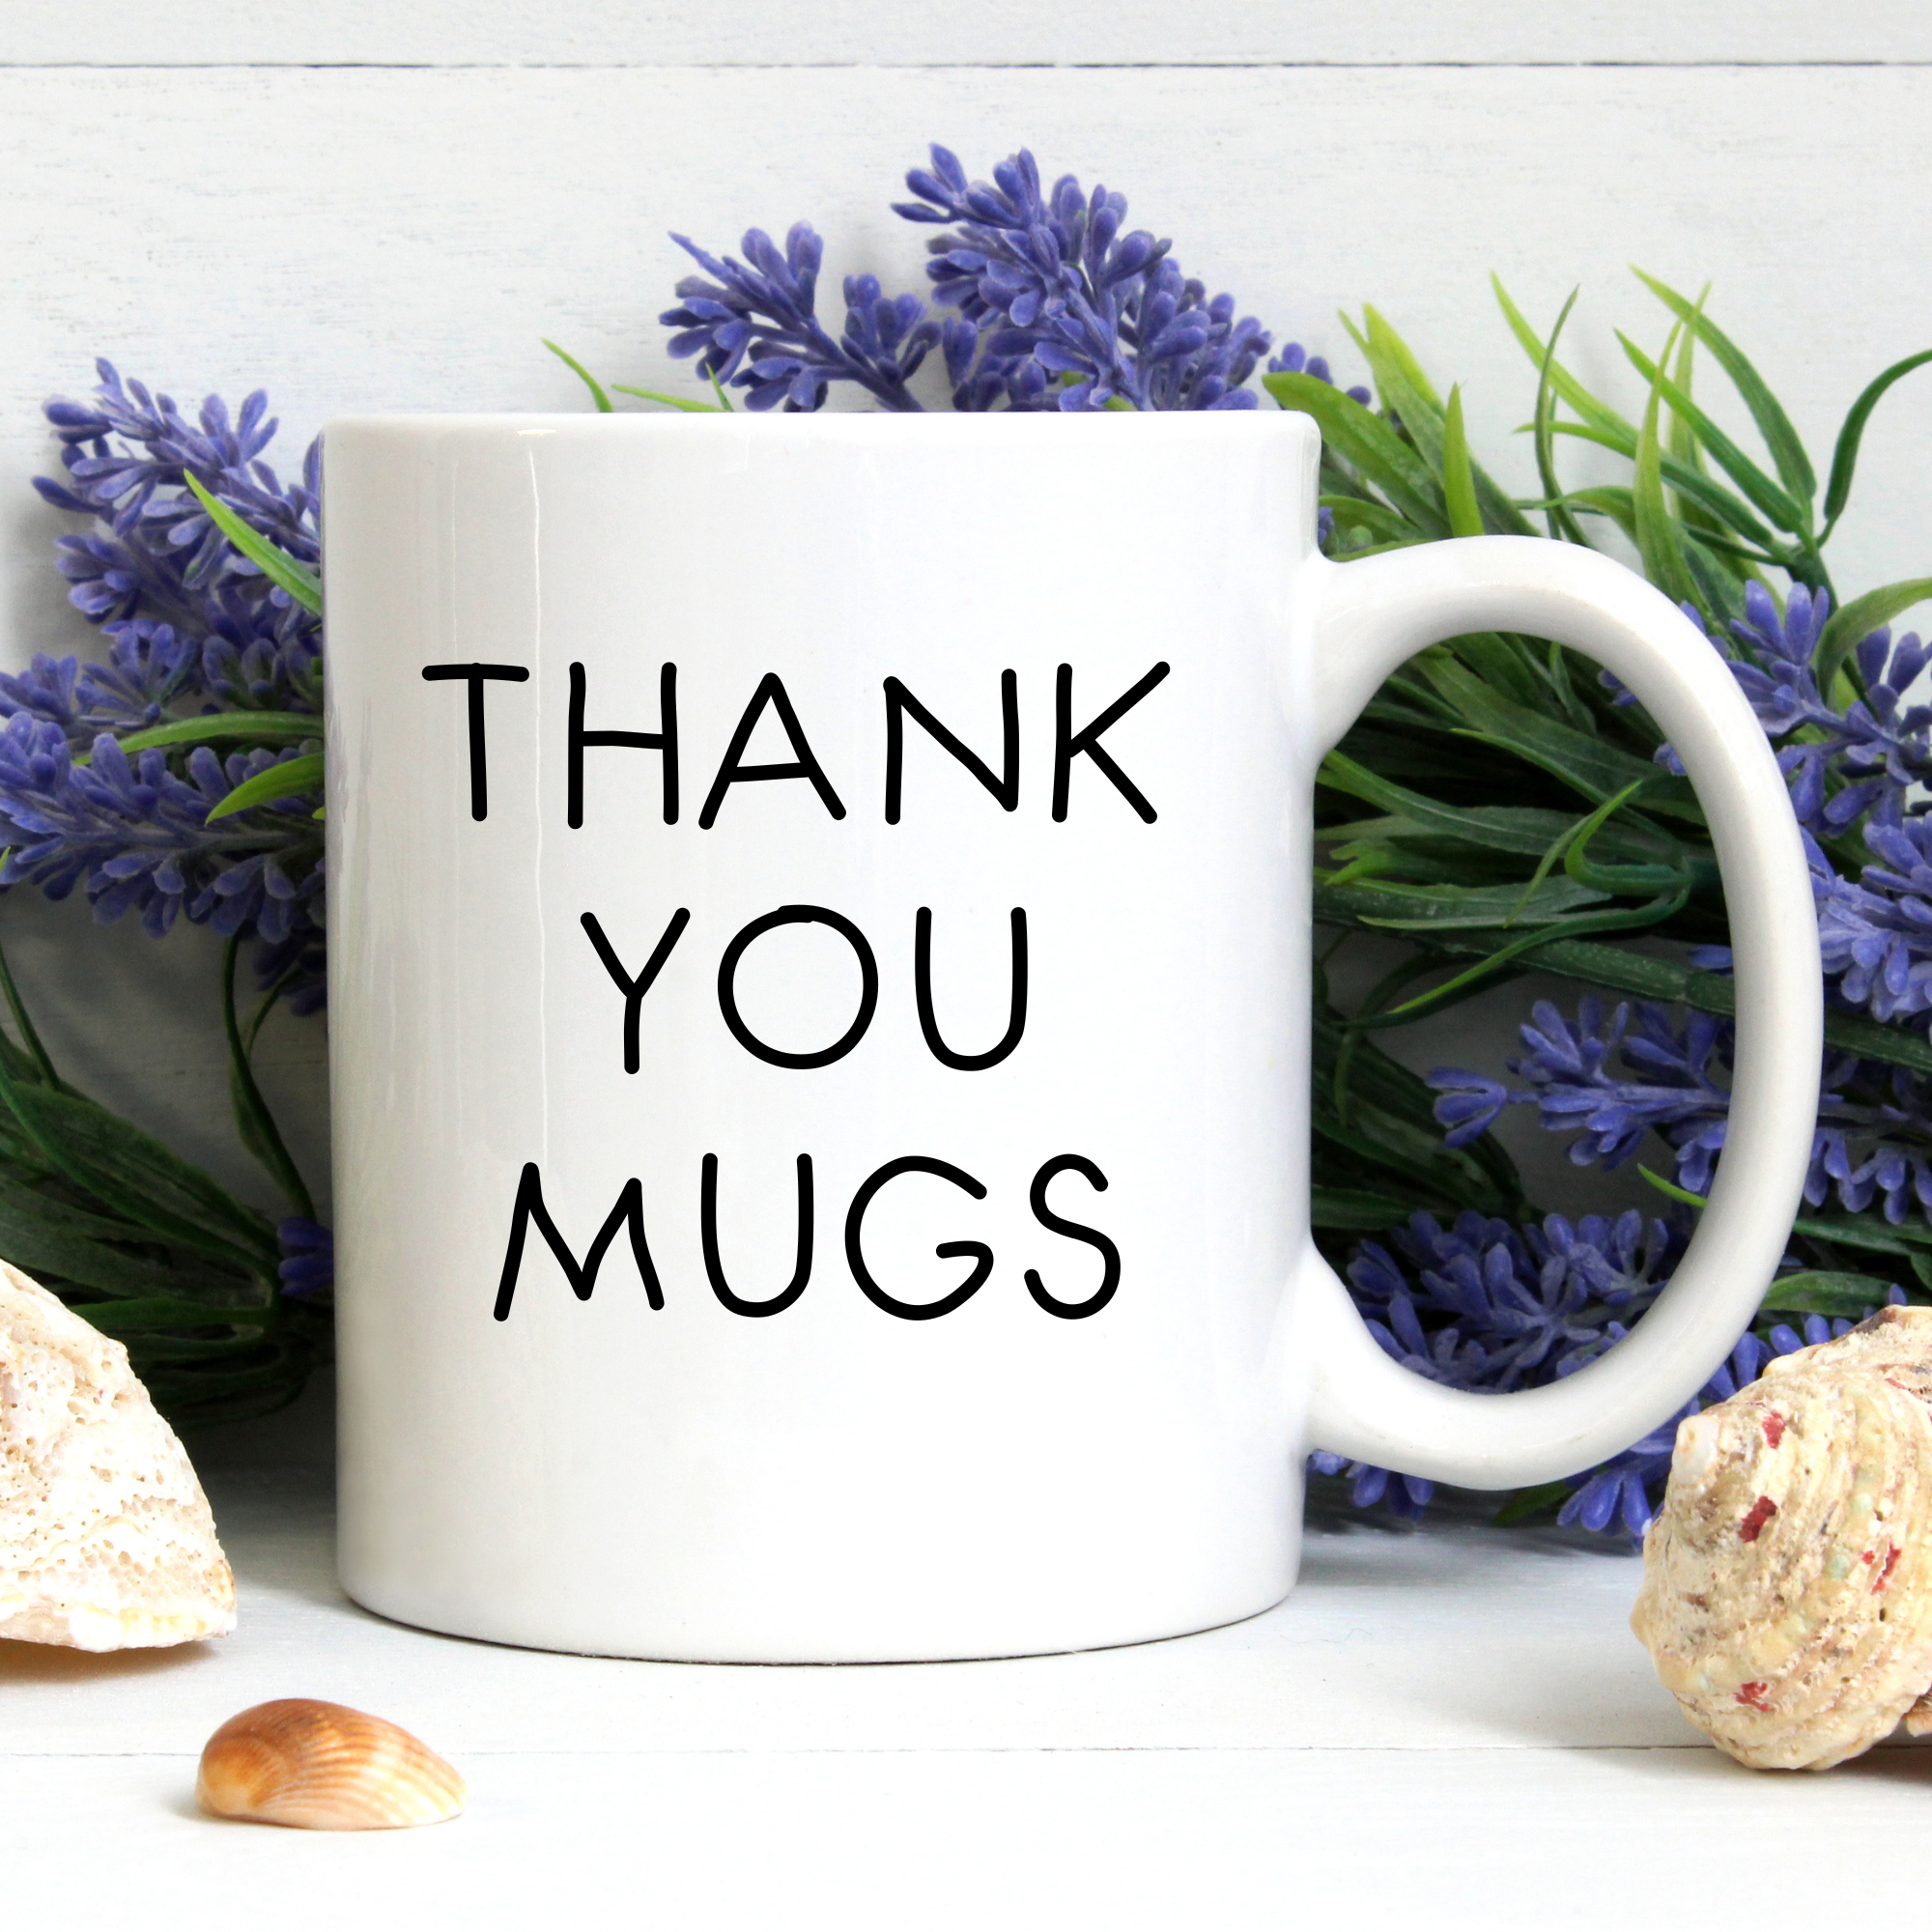 Thank You Mugs